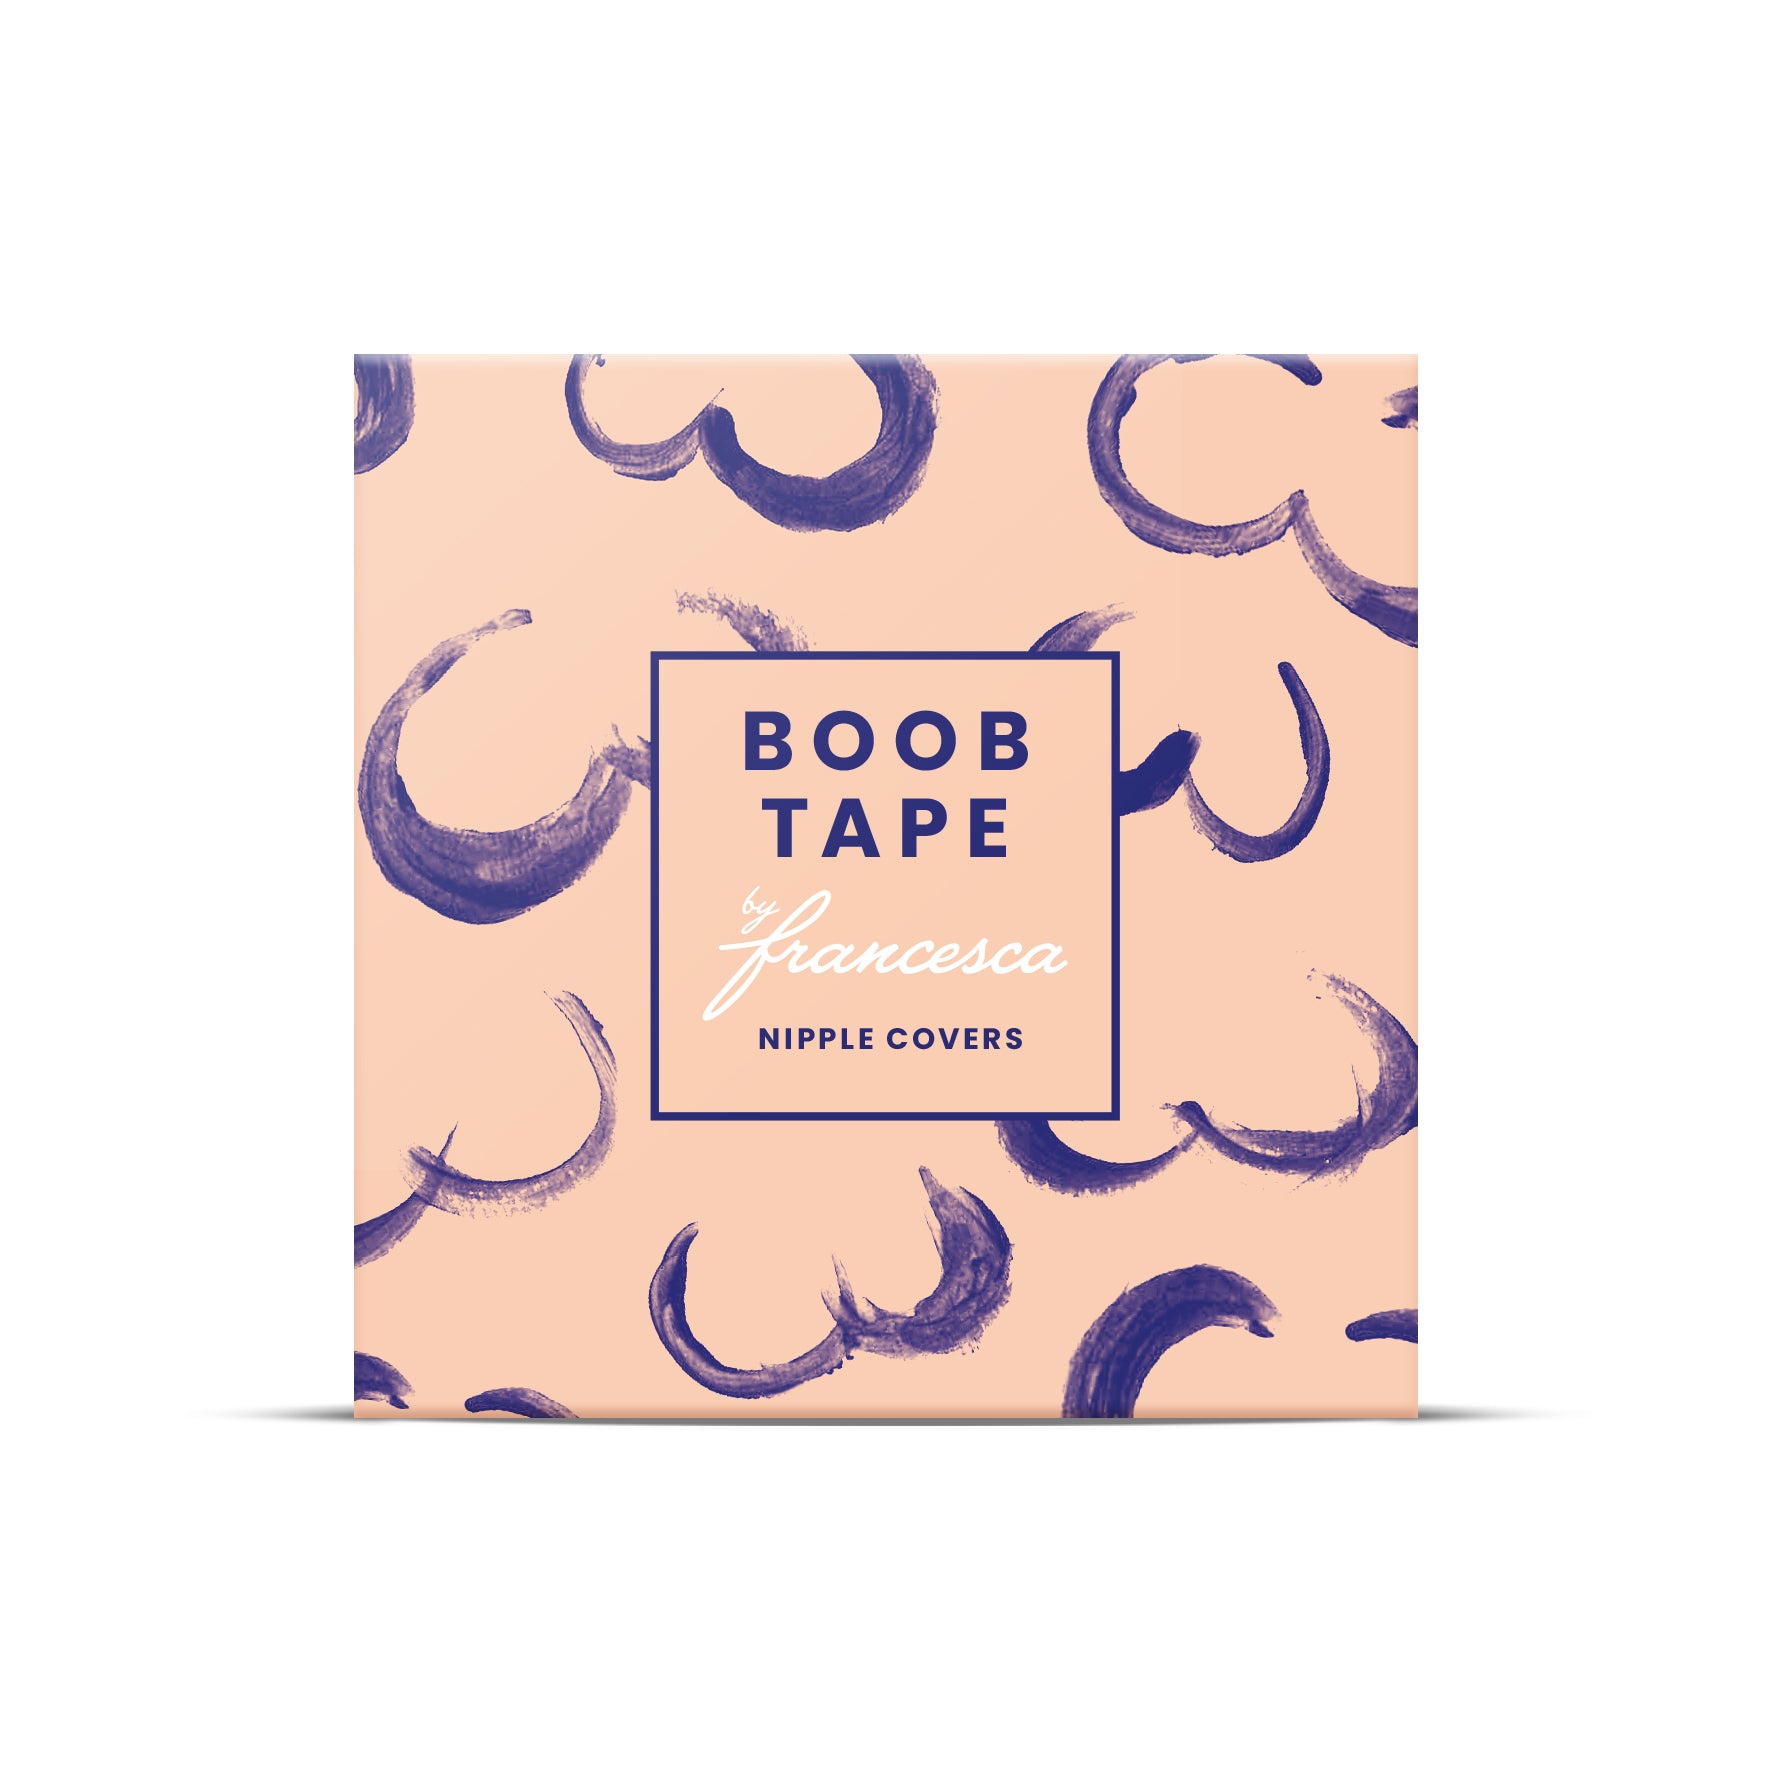 Boob Tape Manufacturer